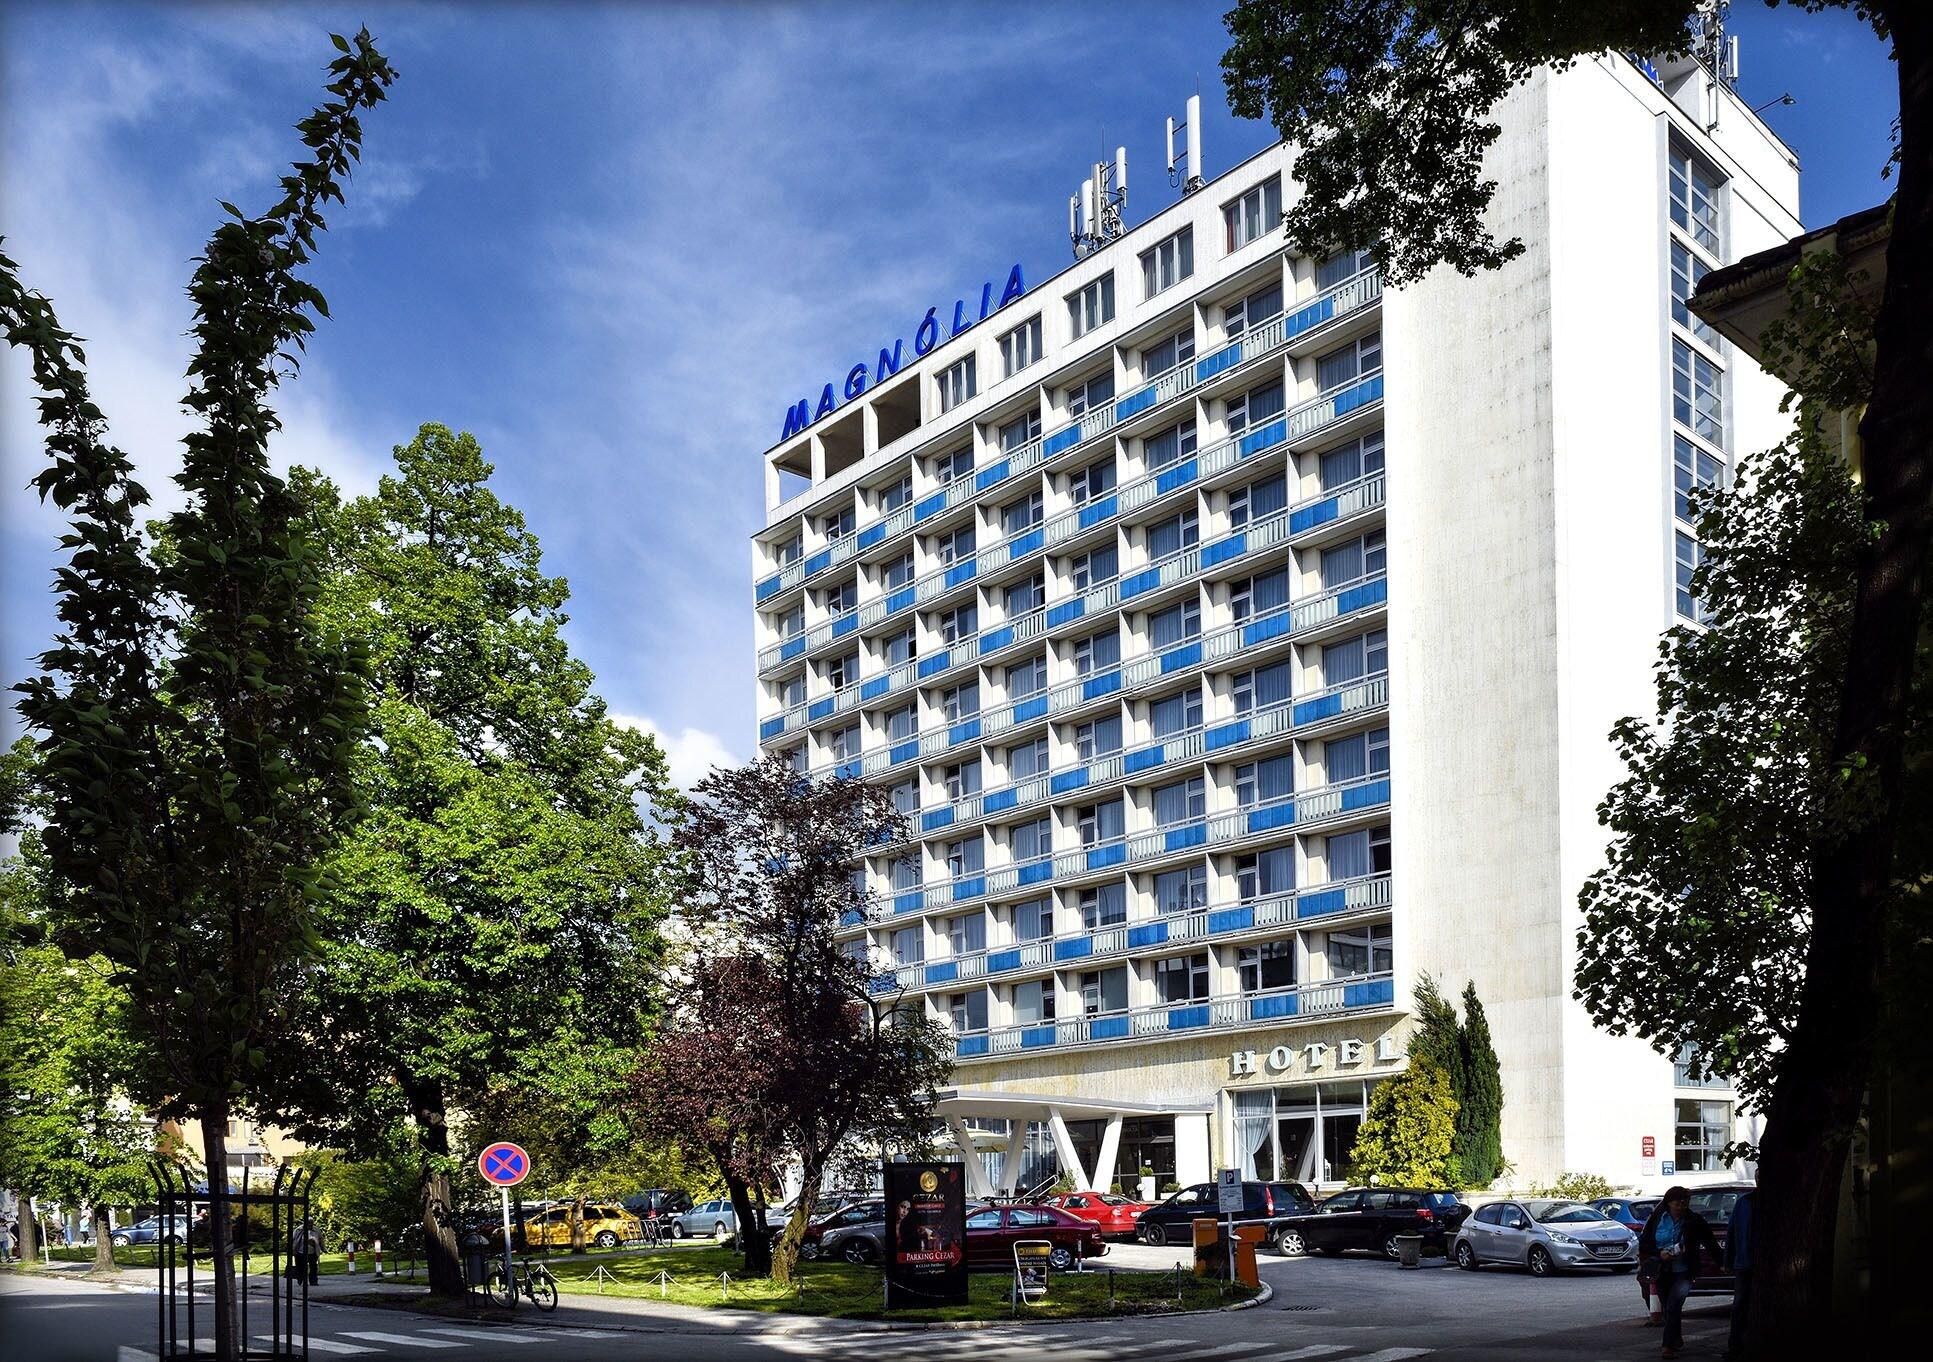 Hotel Magnólia image